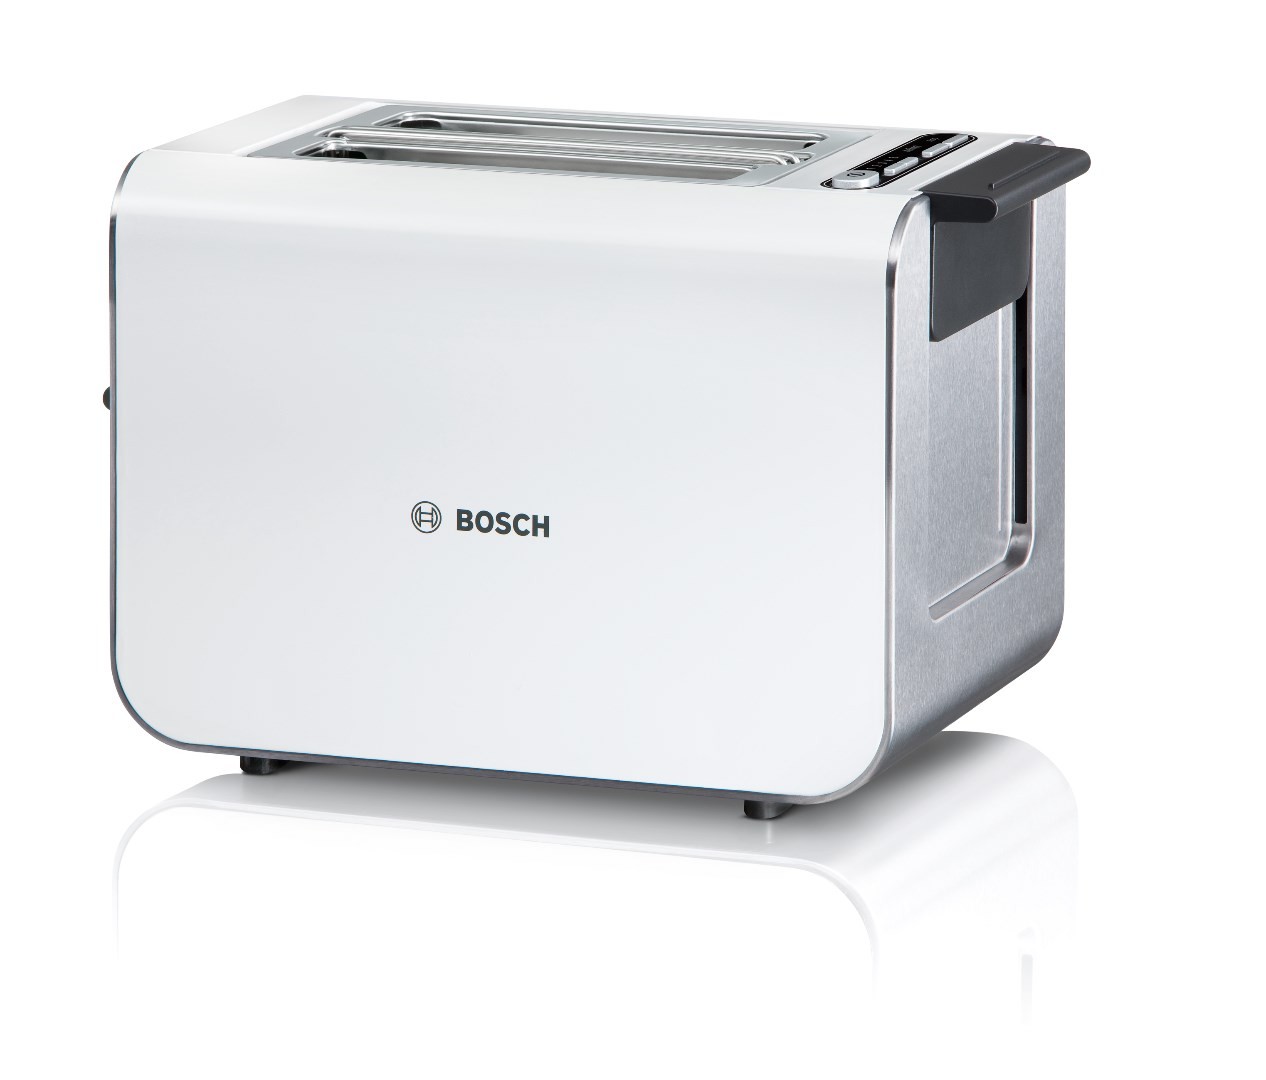 Bosch TAT8611 toaster, a MasterChef appliance